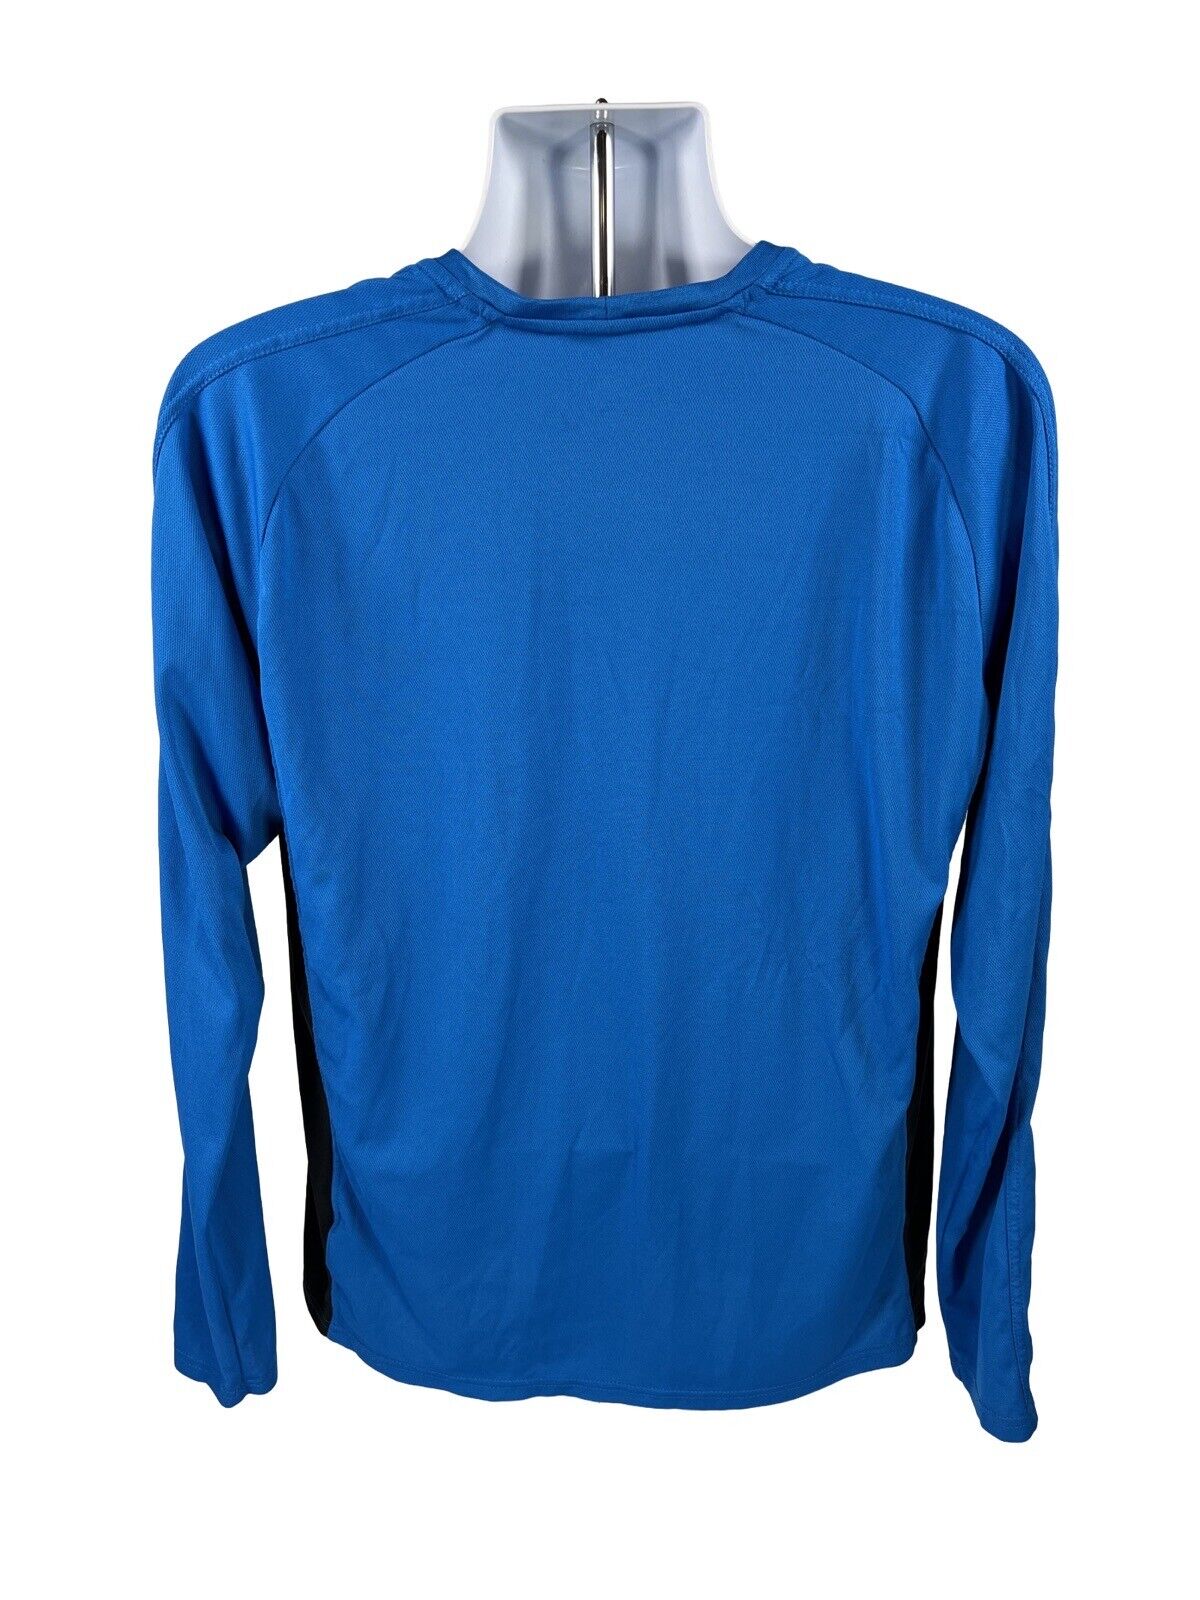 Nike Camiseta deportiva de manga larga azul Fit Dry para hombre - L